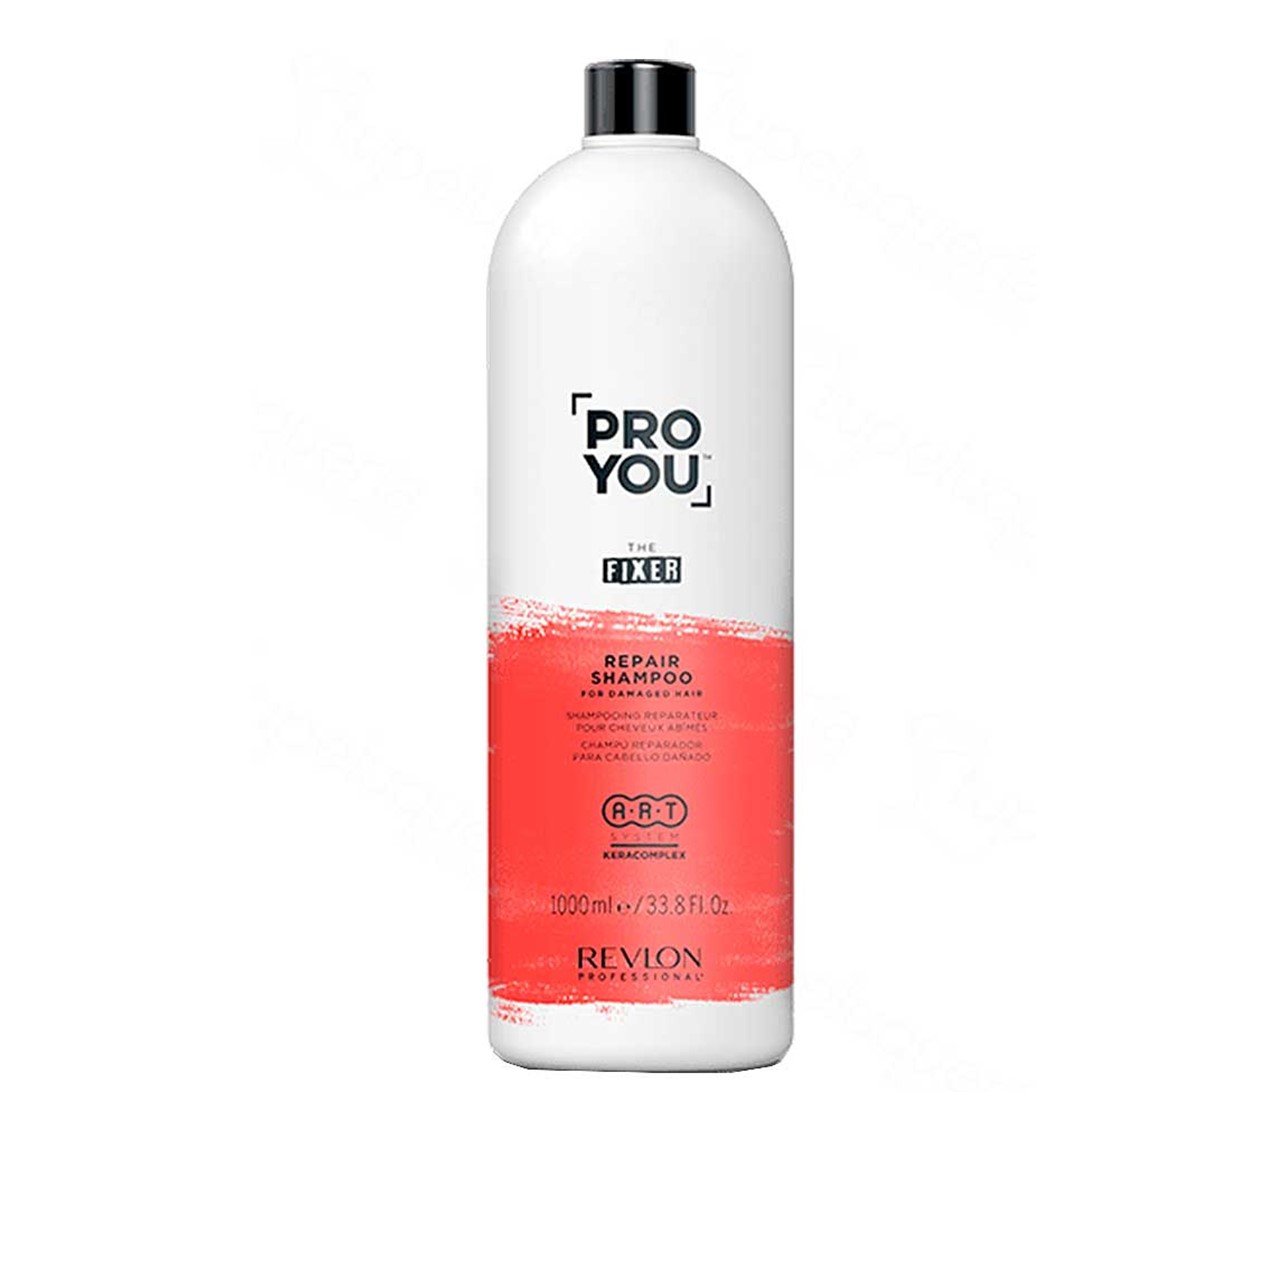 Revlon Professional Pro You The Fixer Repair Shampoo